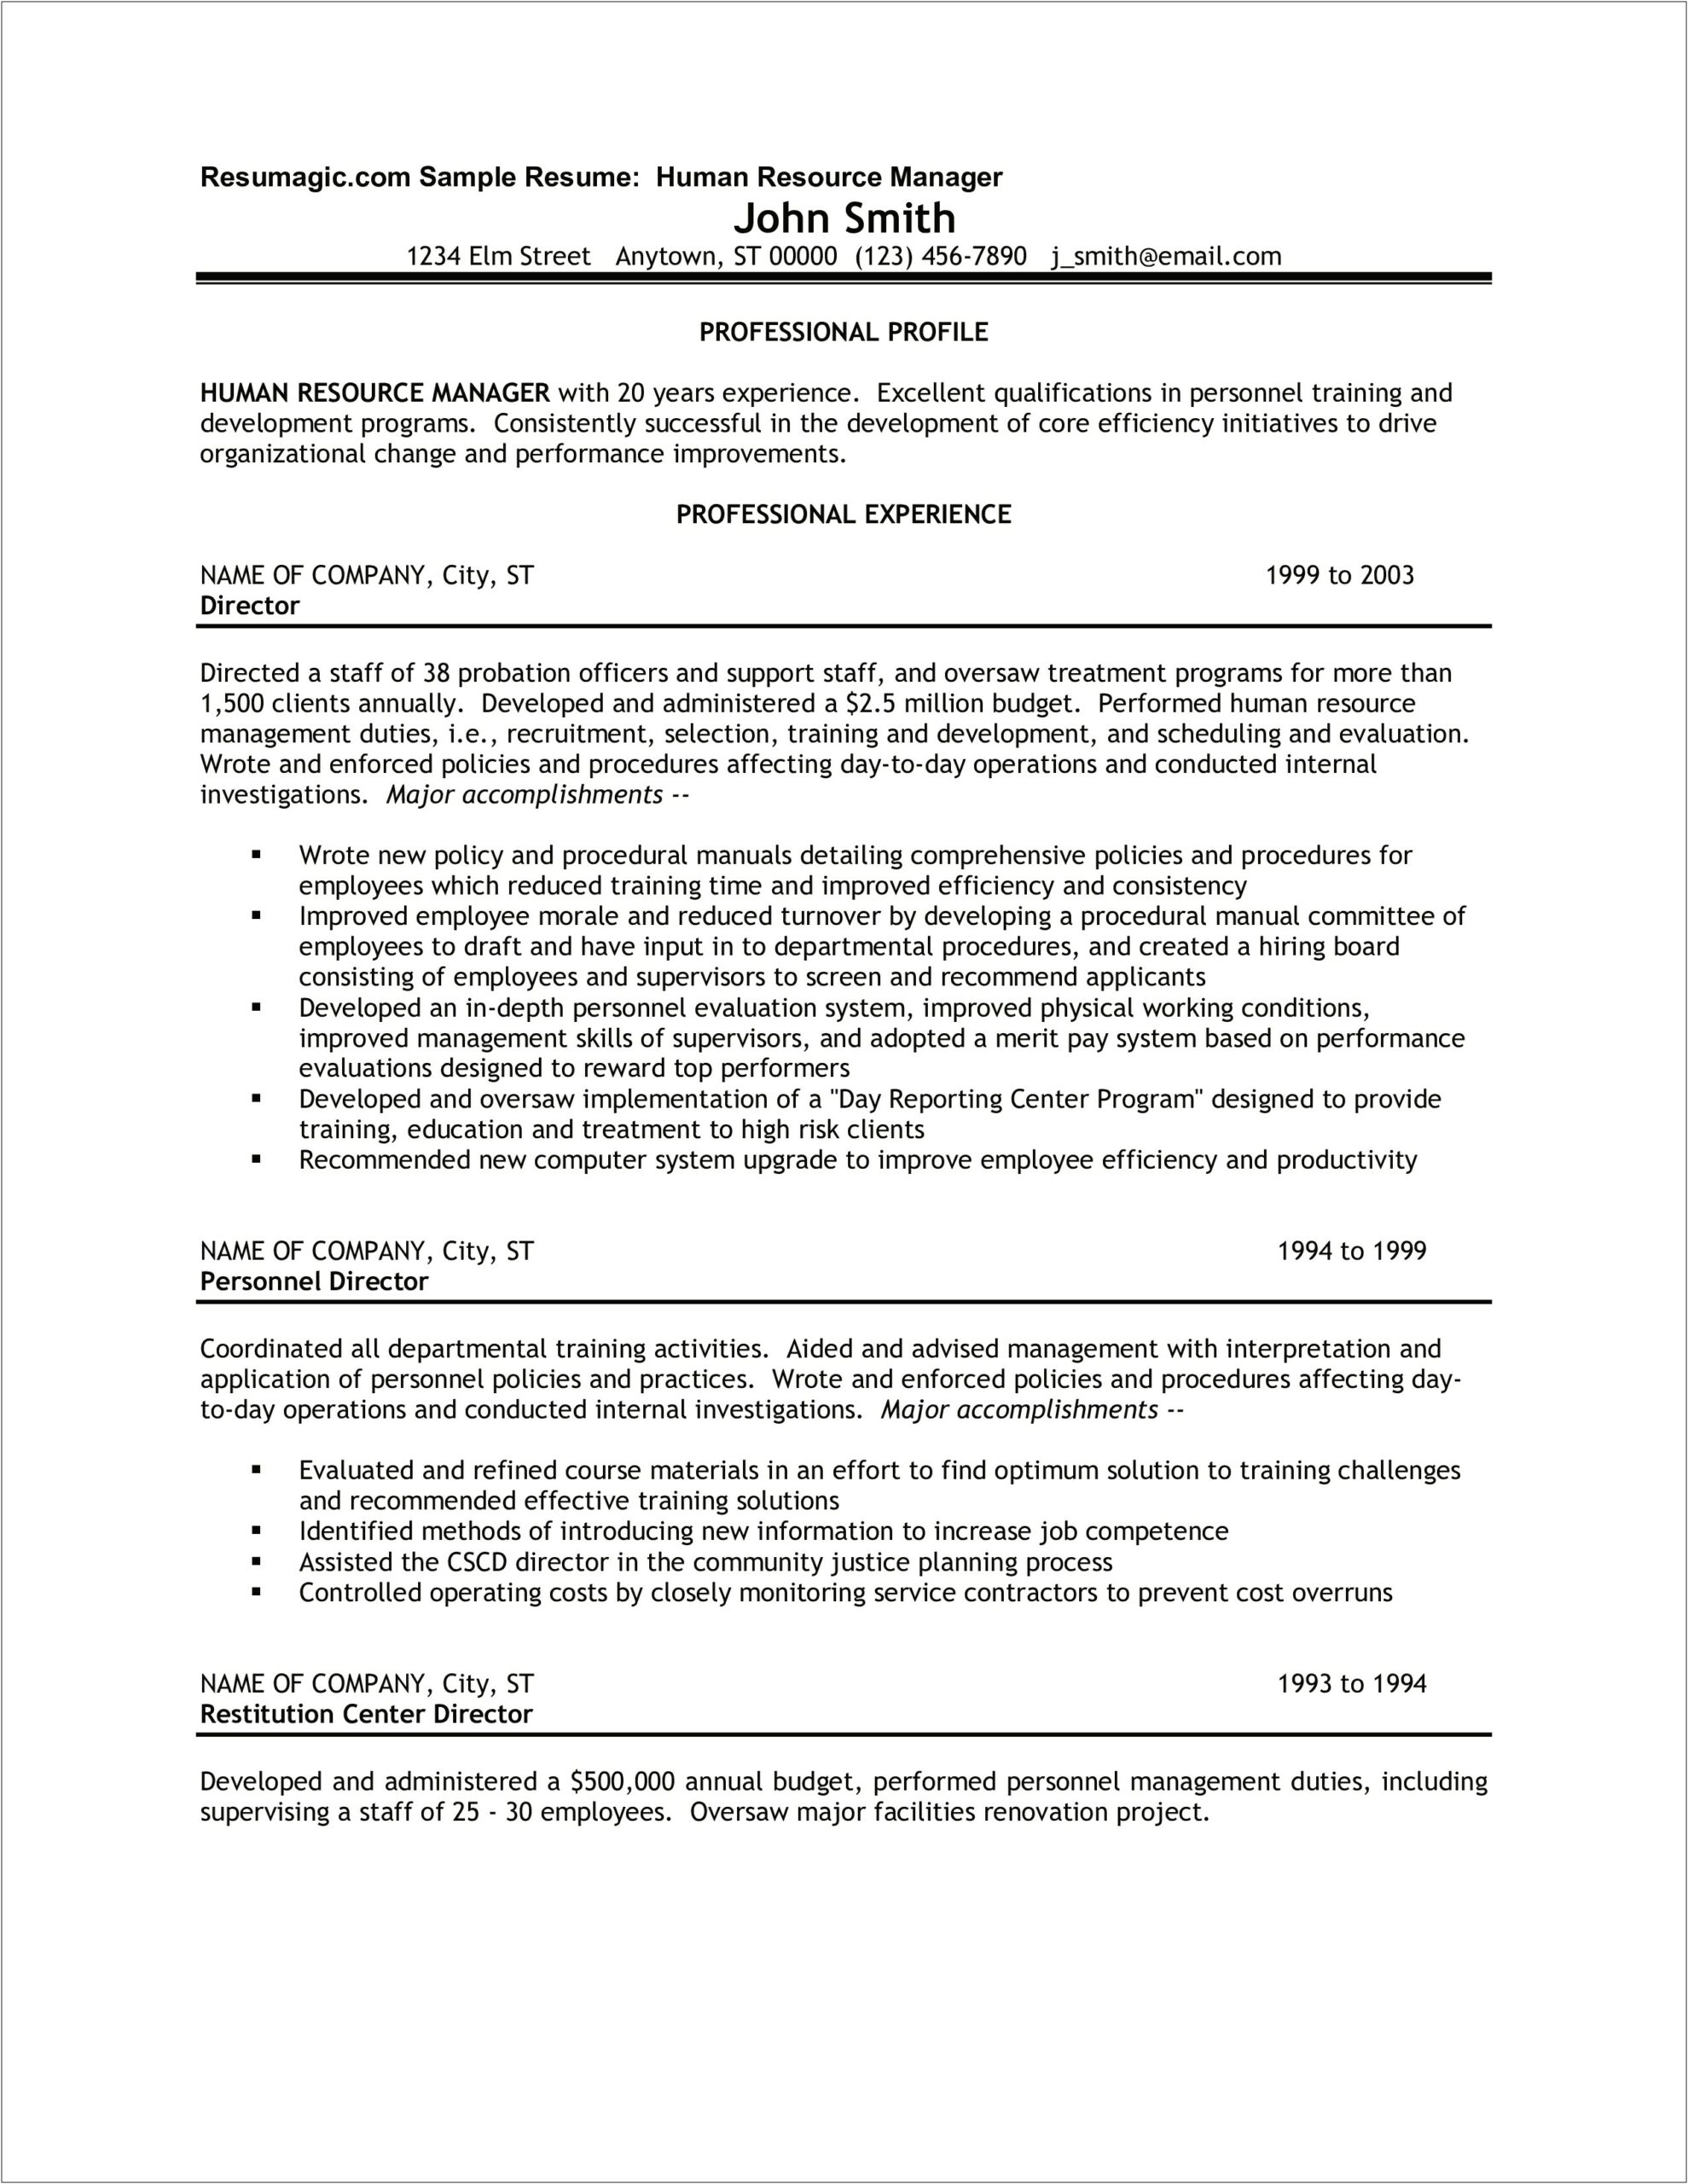 Sample Resume For Hiring Manager